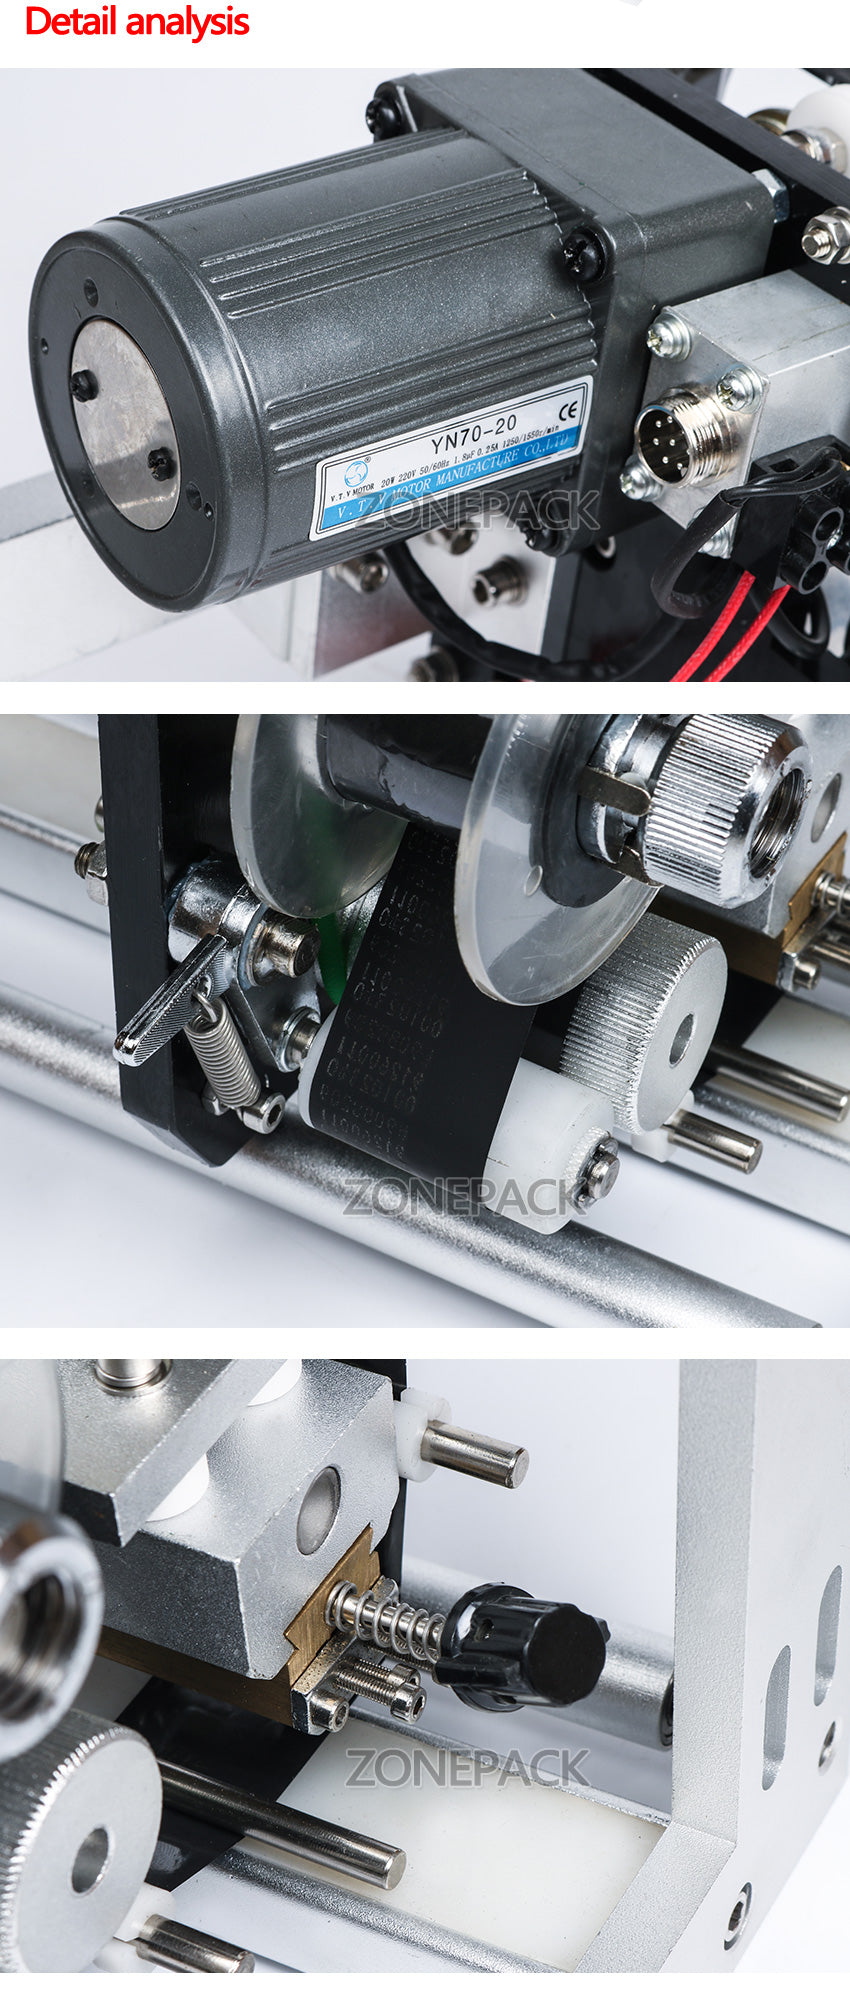 ZONESUN Expiry Date Ribbon Coding Label Printer Hot Ribbon Coder For LT-50 Labeling Machine